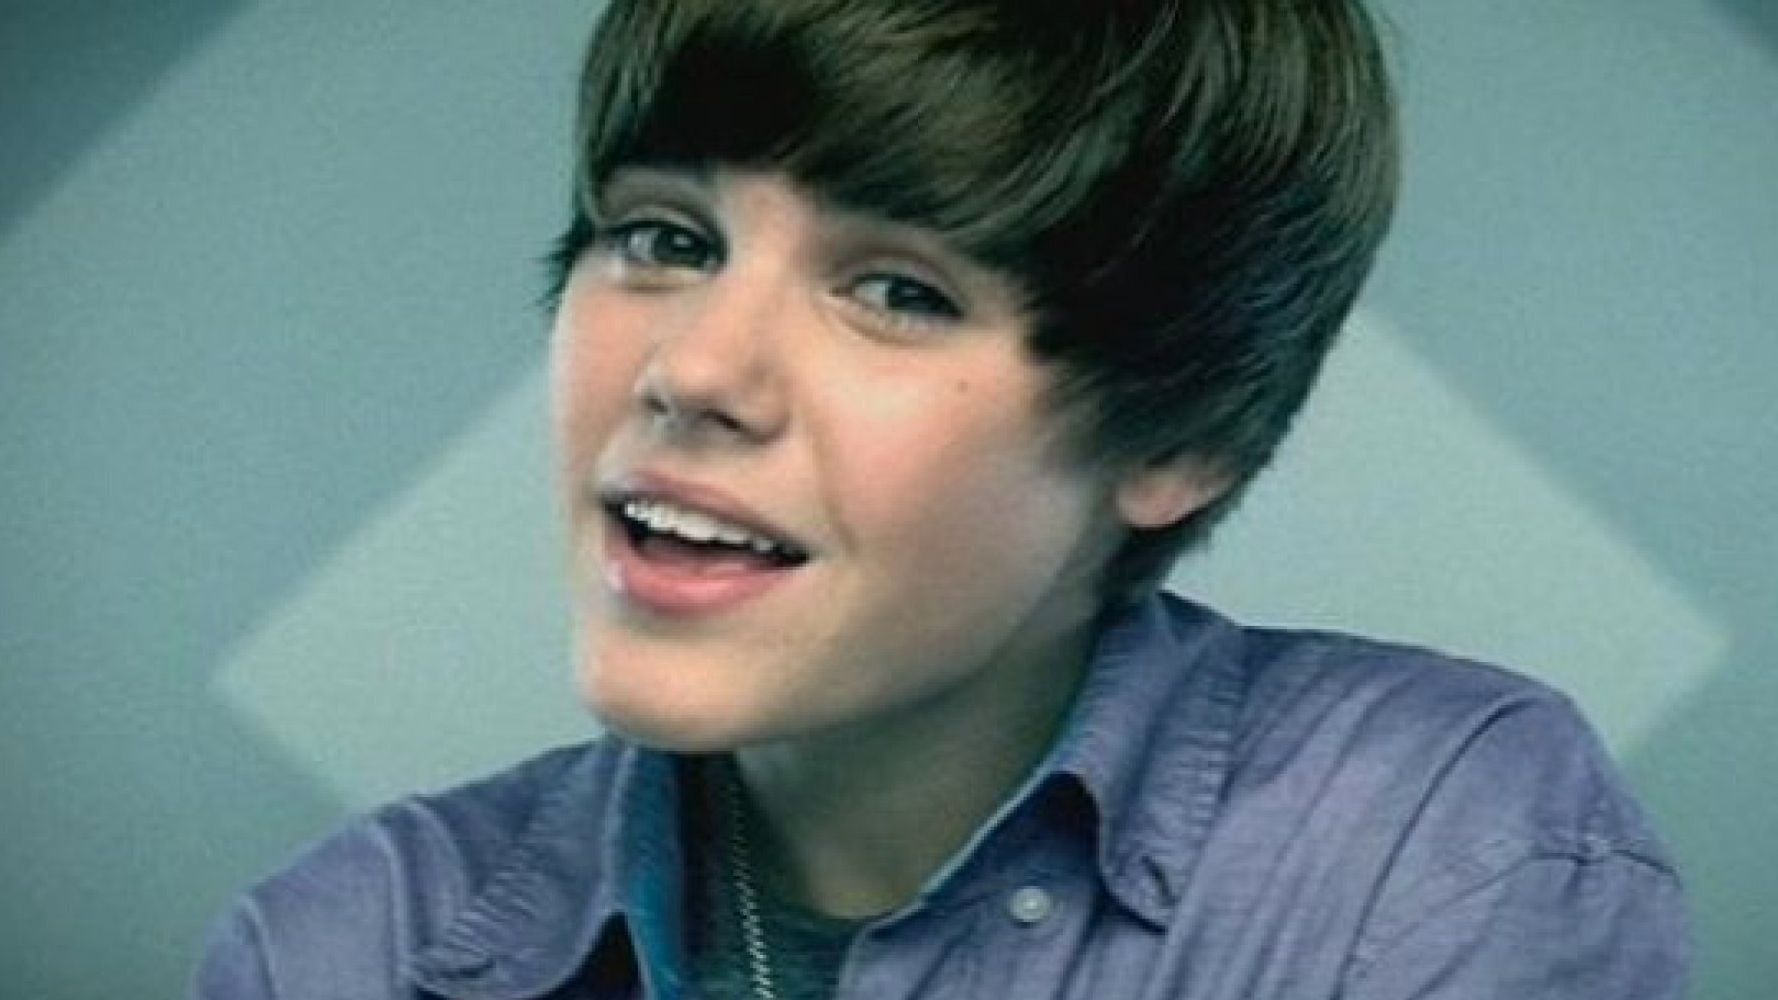 BabyHit1Billion Justin Bieber's 'Baby' Video Hits 1 Billion Plays On